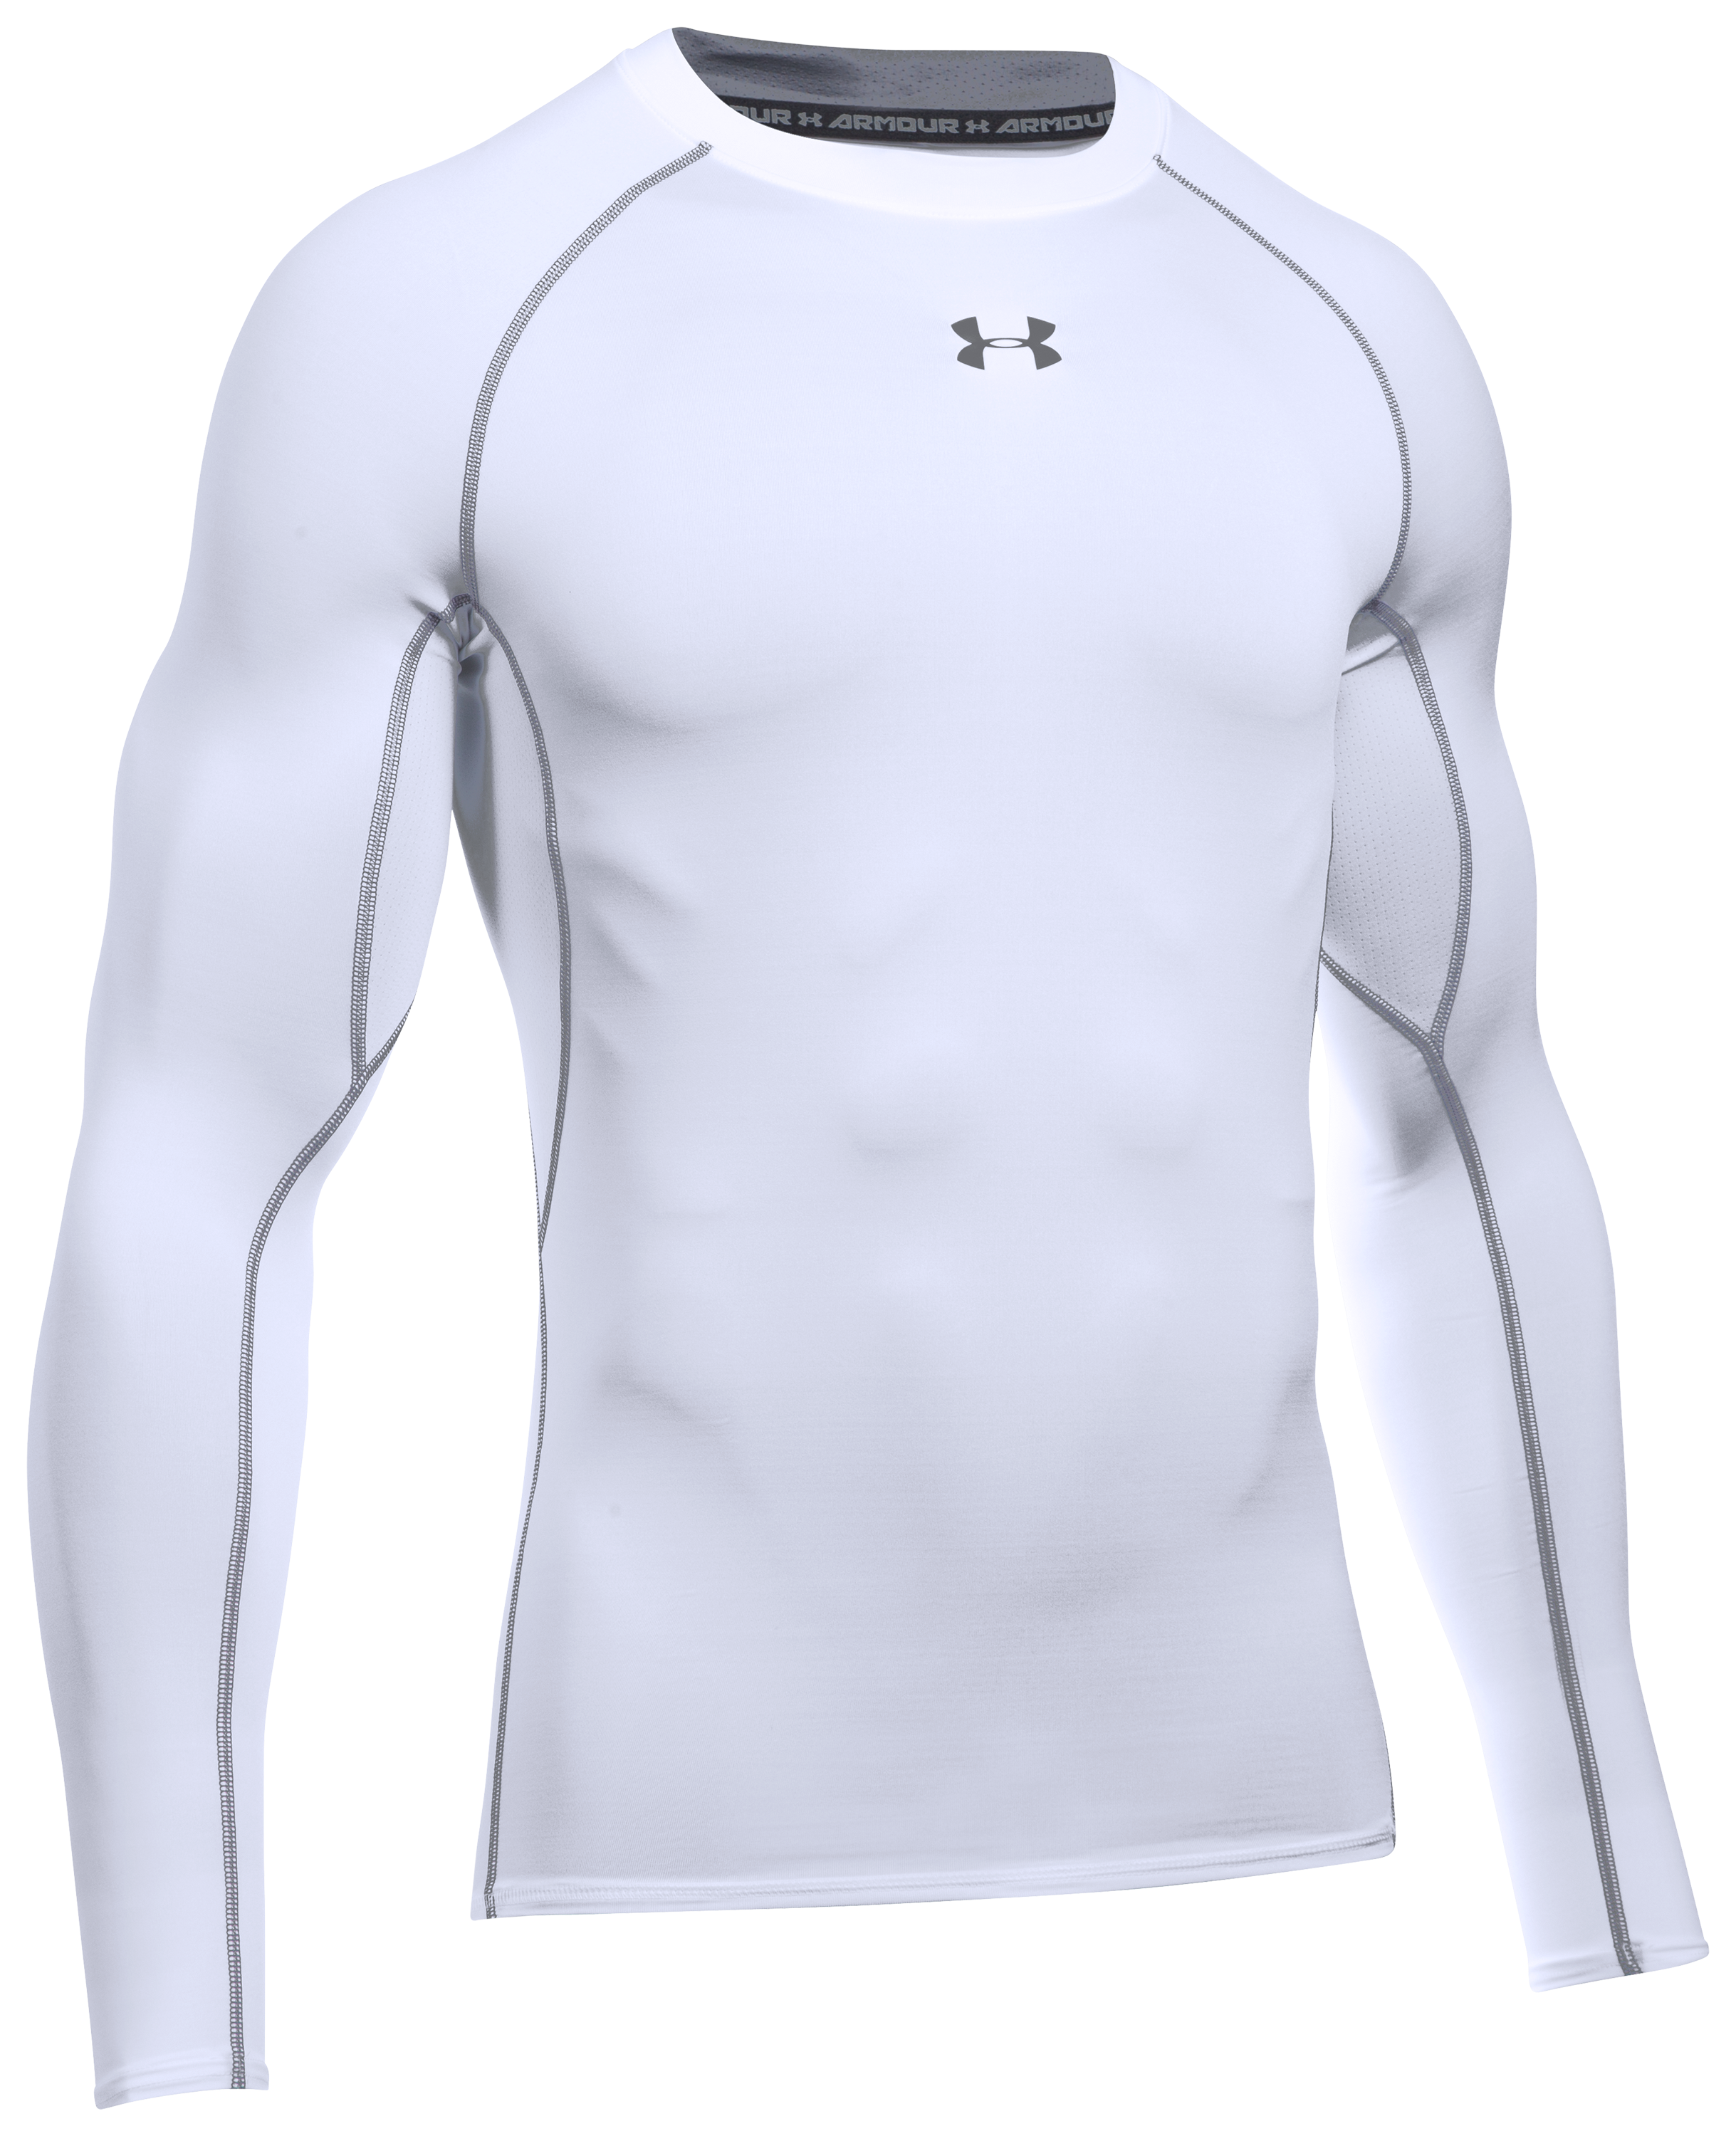 Under Armour UA HeatGear Armour Long Sleeve Compression Shirts - Men's